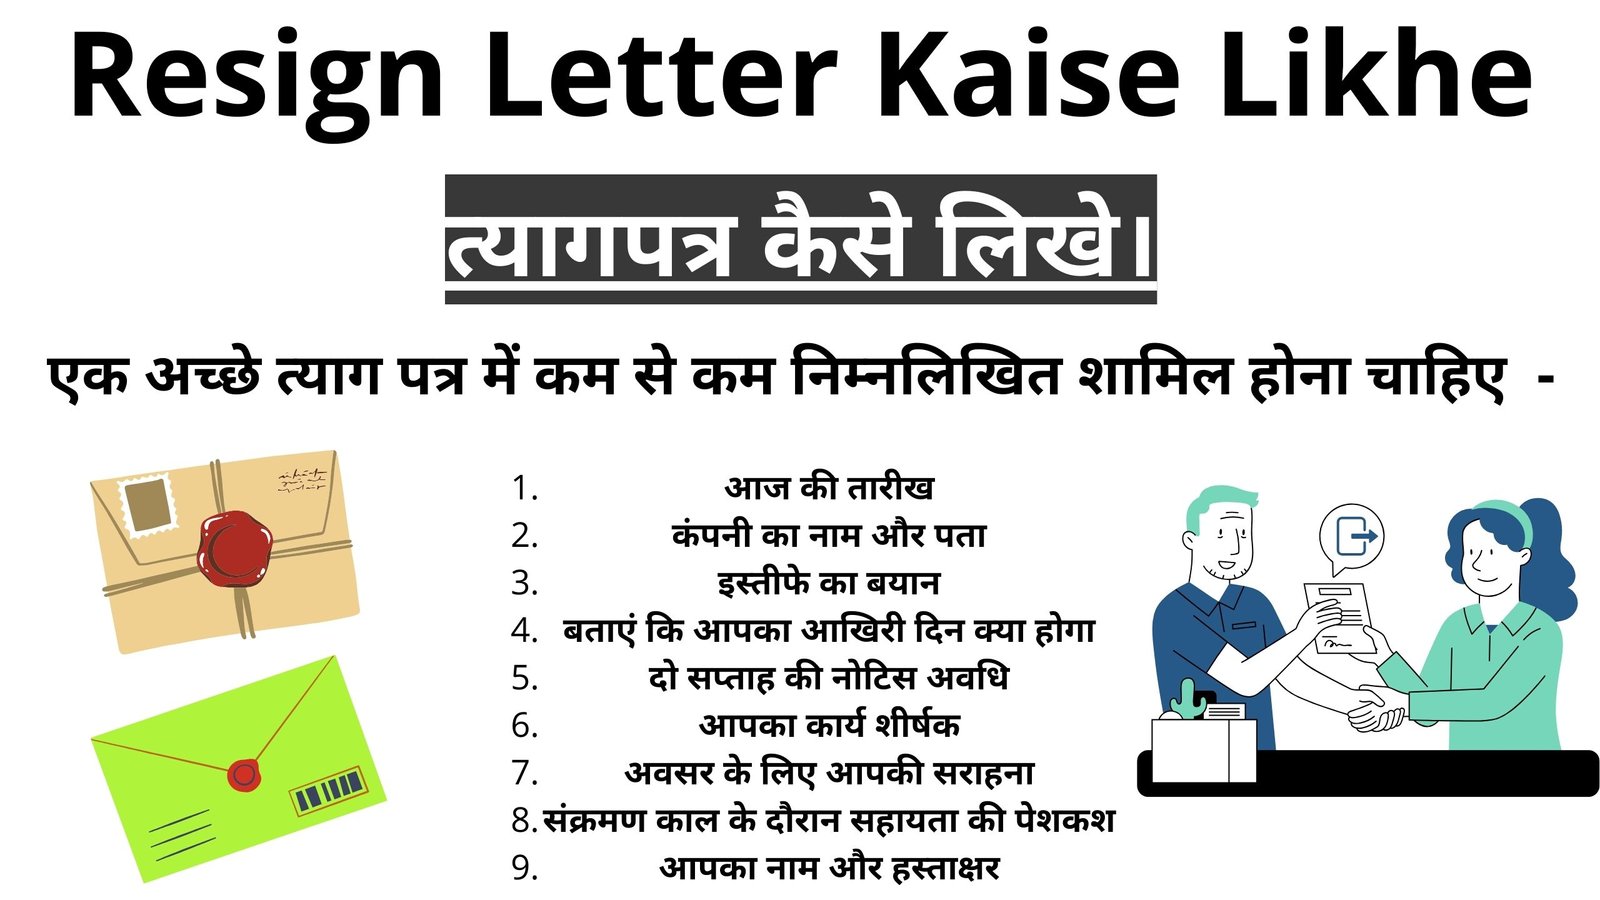 Resign Letter Kaise Likhe - त्यागपत्र कैसे लिखे। रिजाइन लेटर कैसे लिखे।